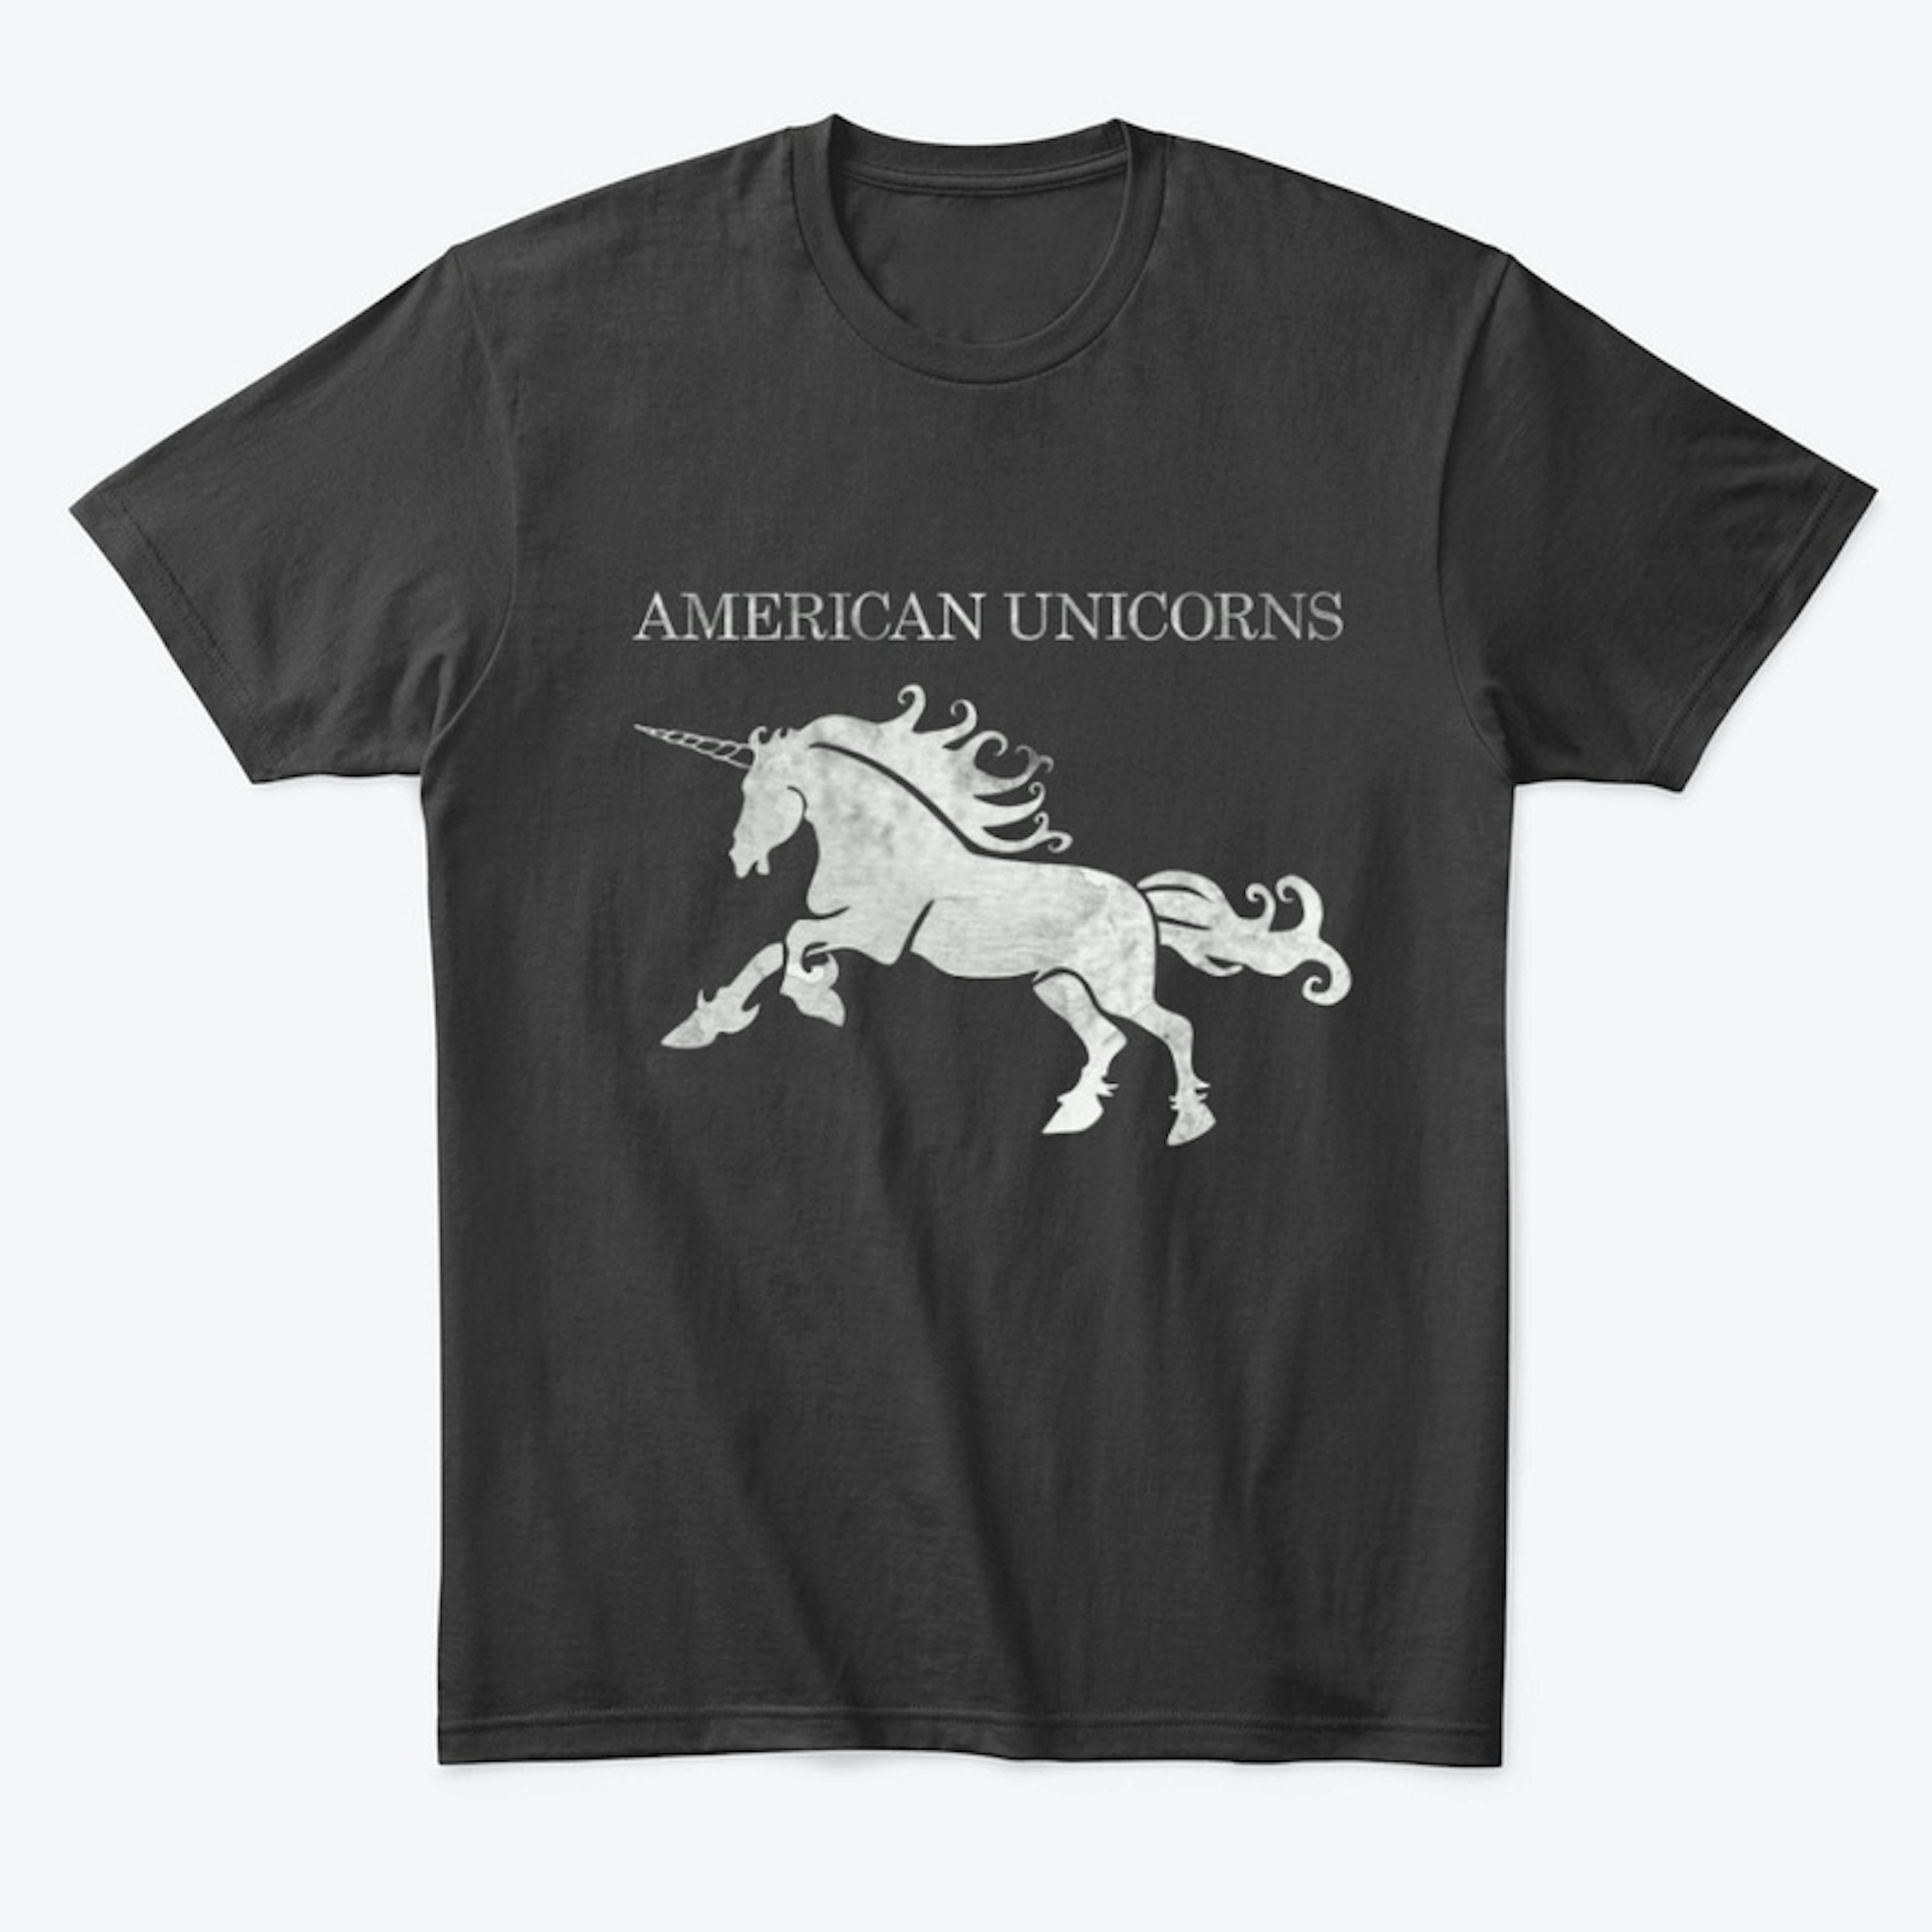 American Unicorns grunge